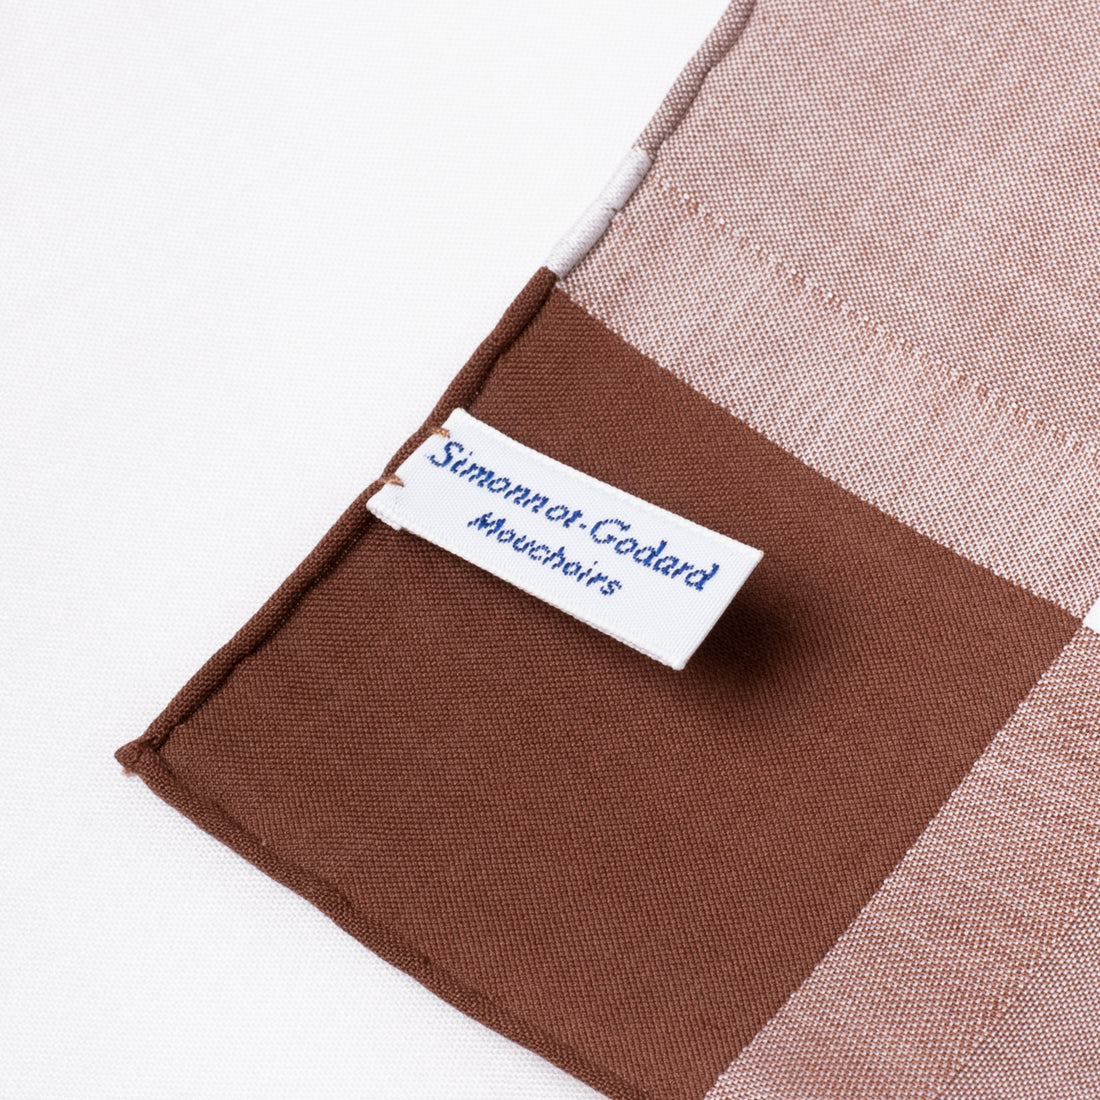 Simonnot Godard Arlequin Handkerchief Marron/White